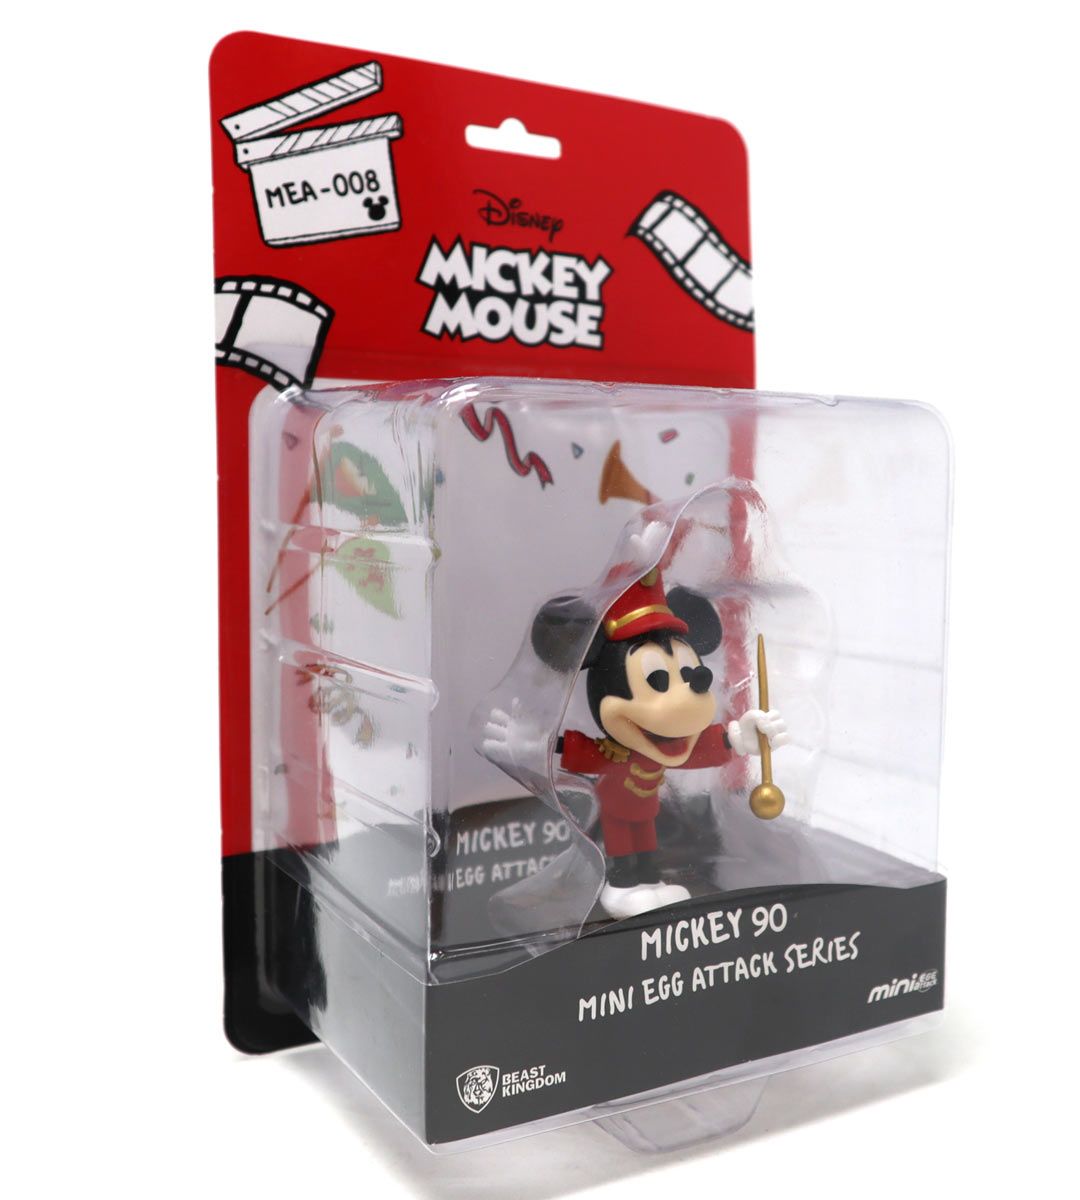 Mini Egg Attack Series - Circus Mickey (Mickey Mouse)